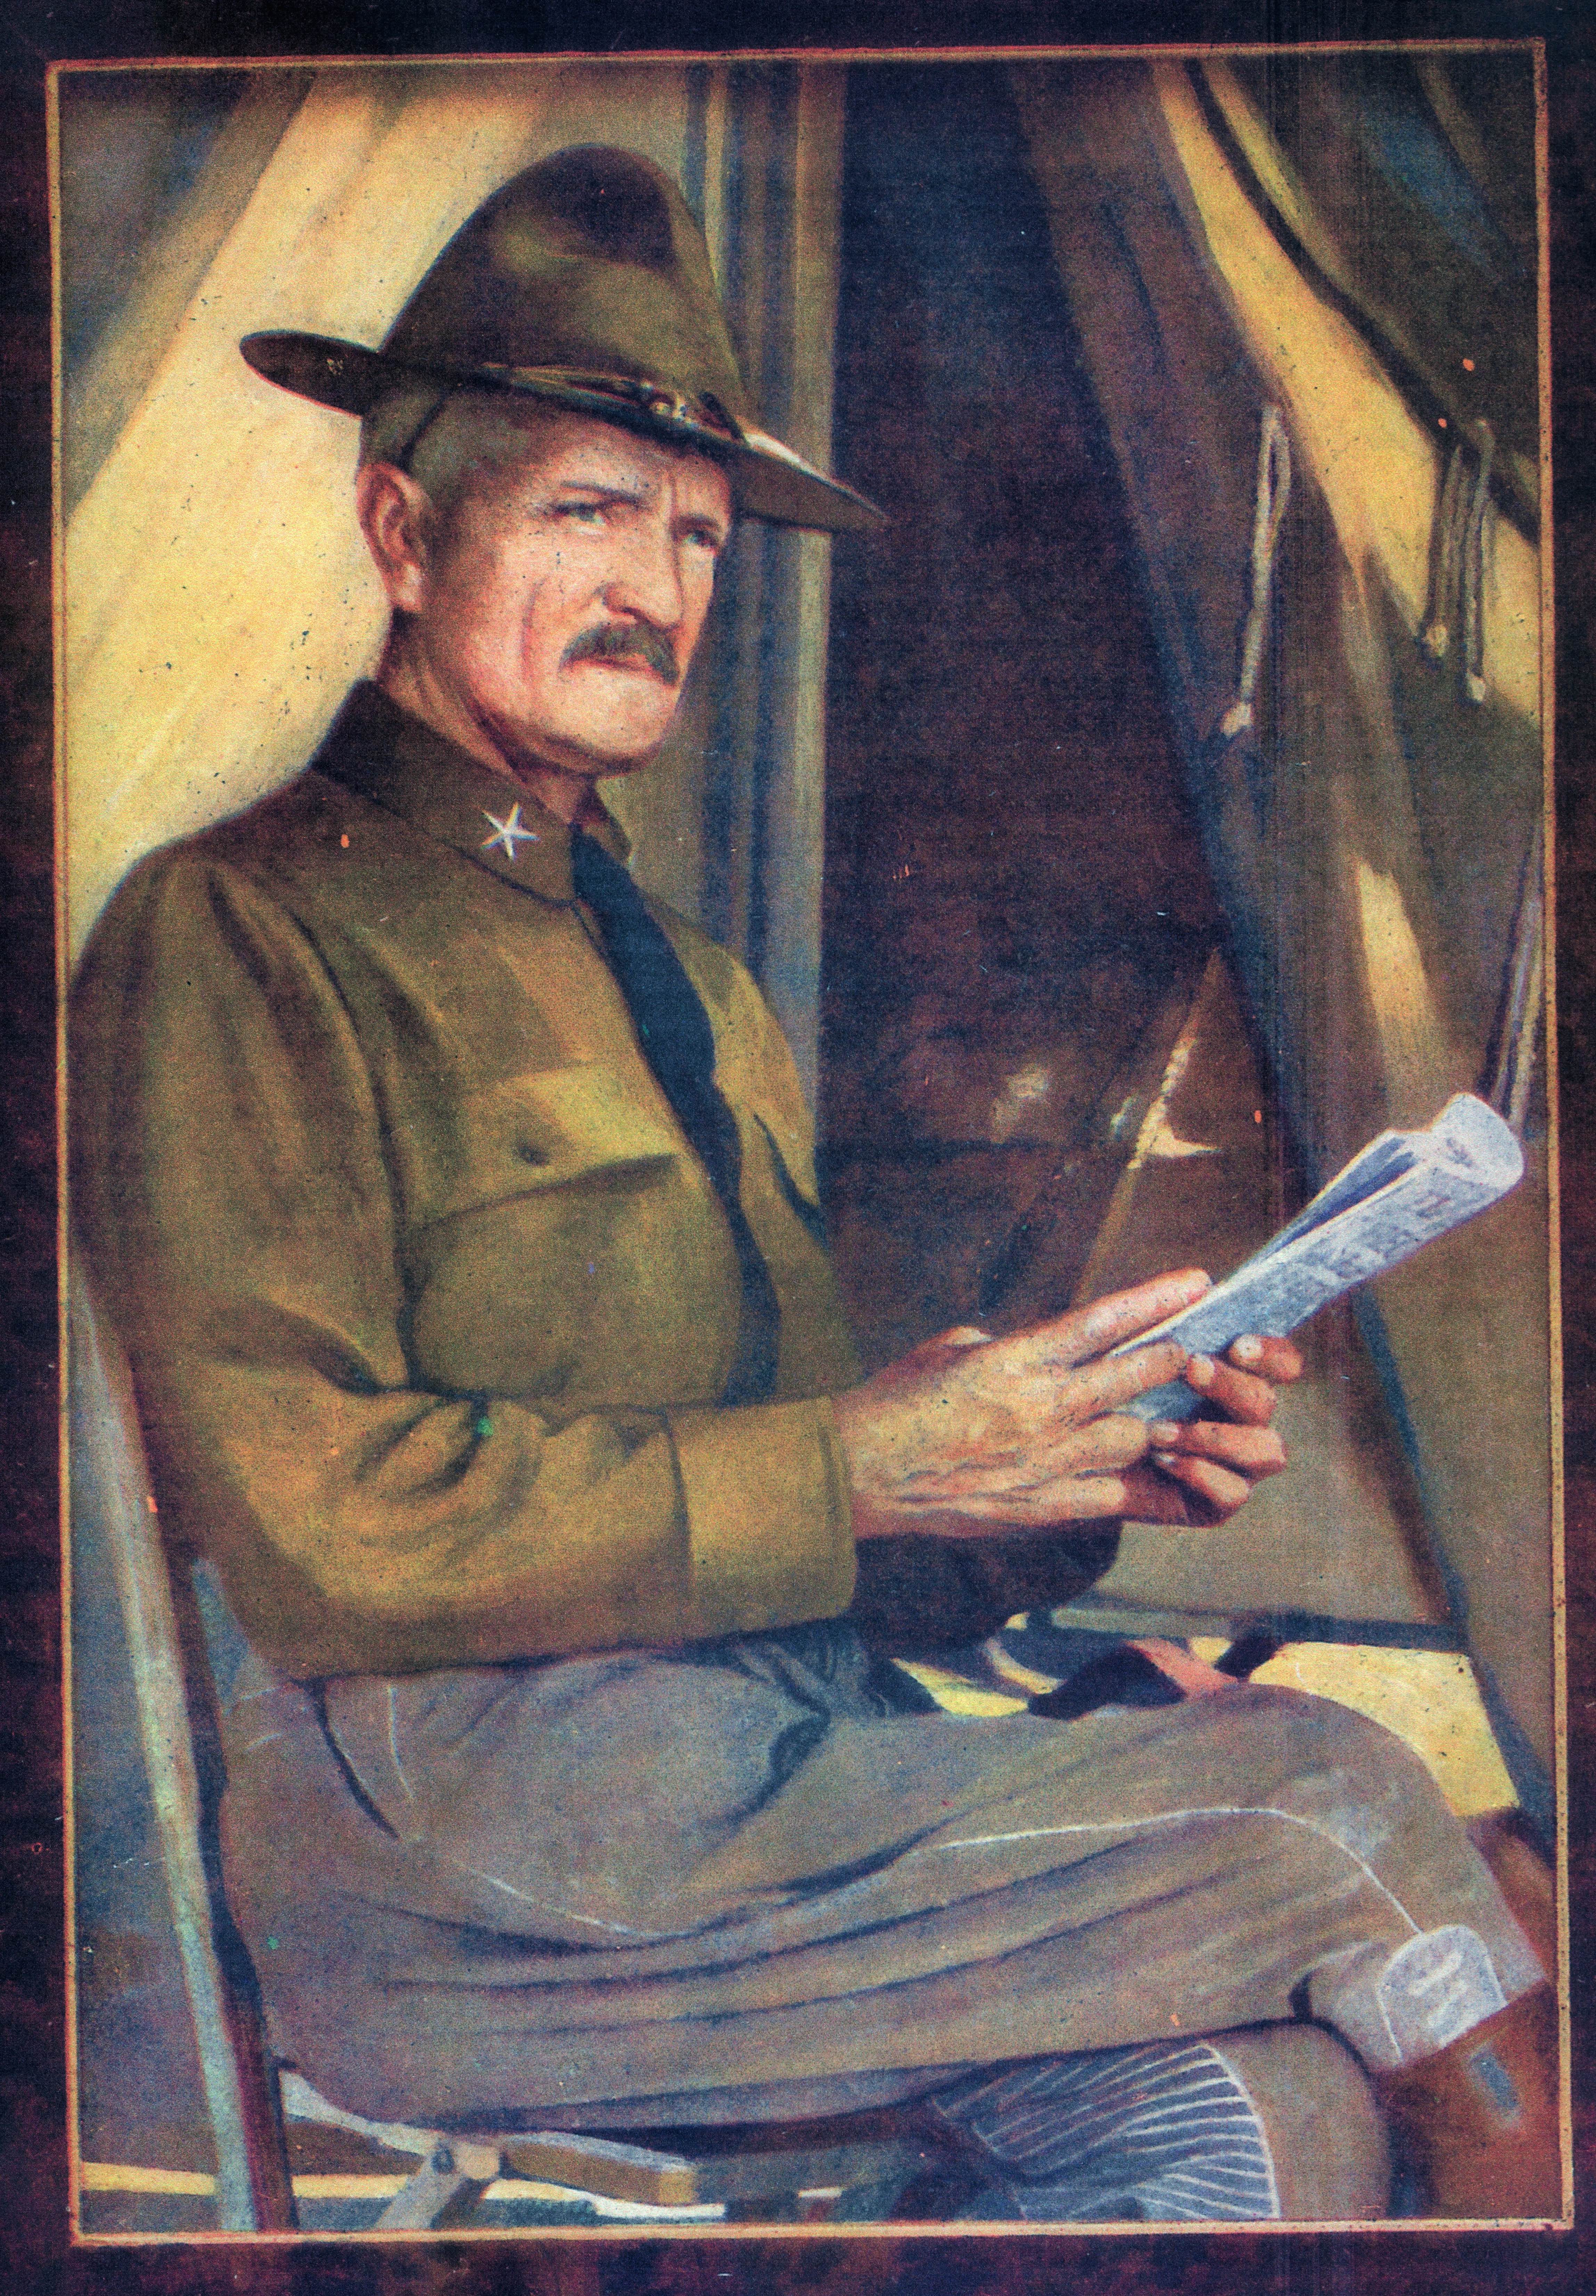 Le Général J-J Pershing